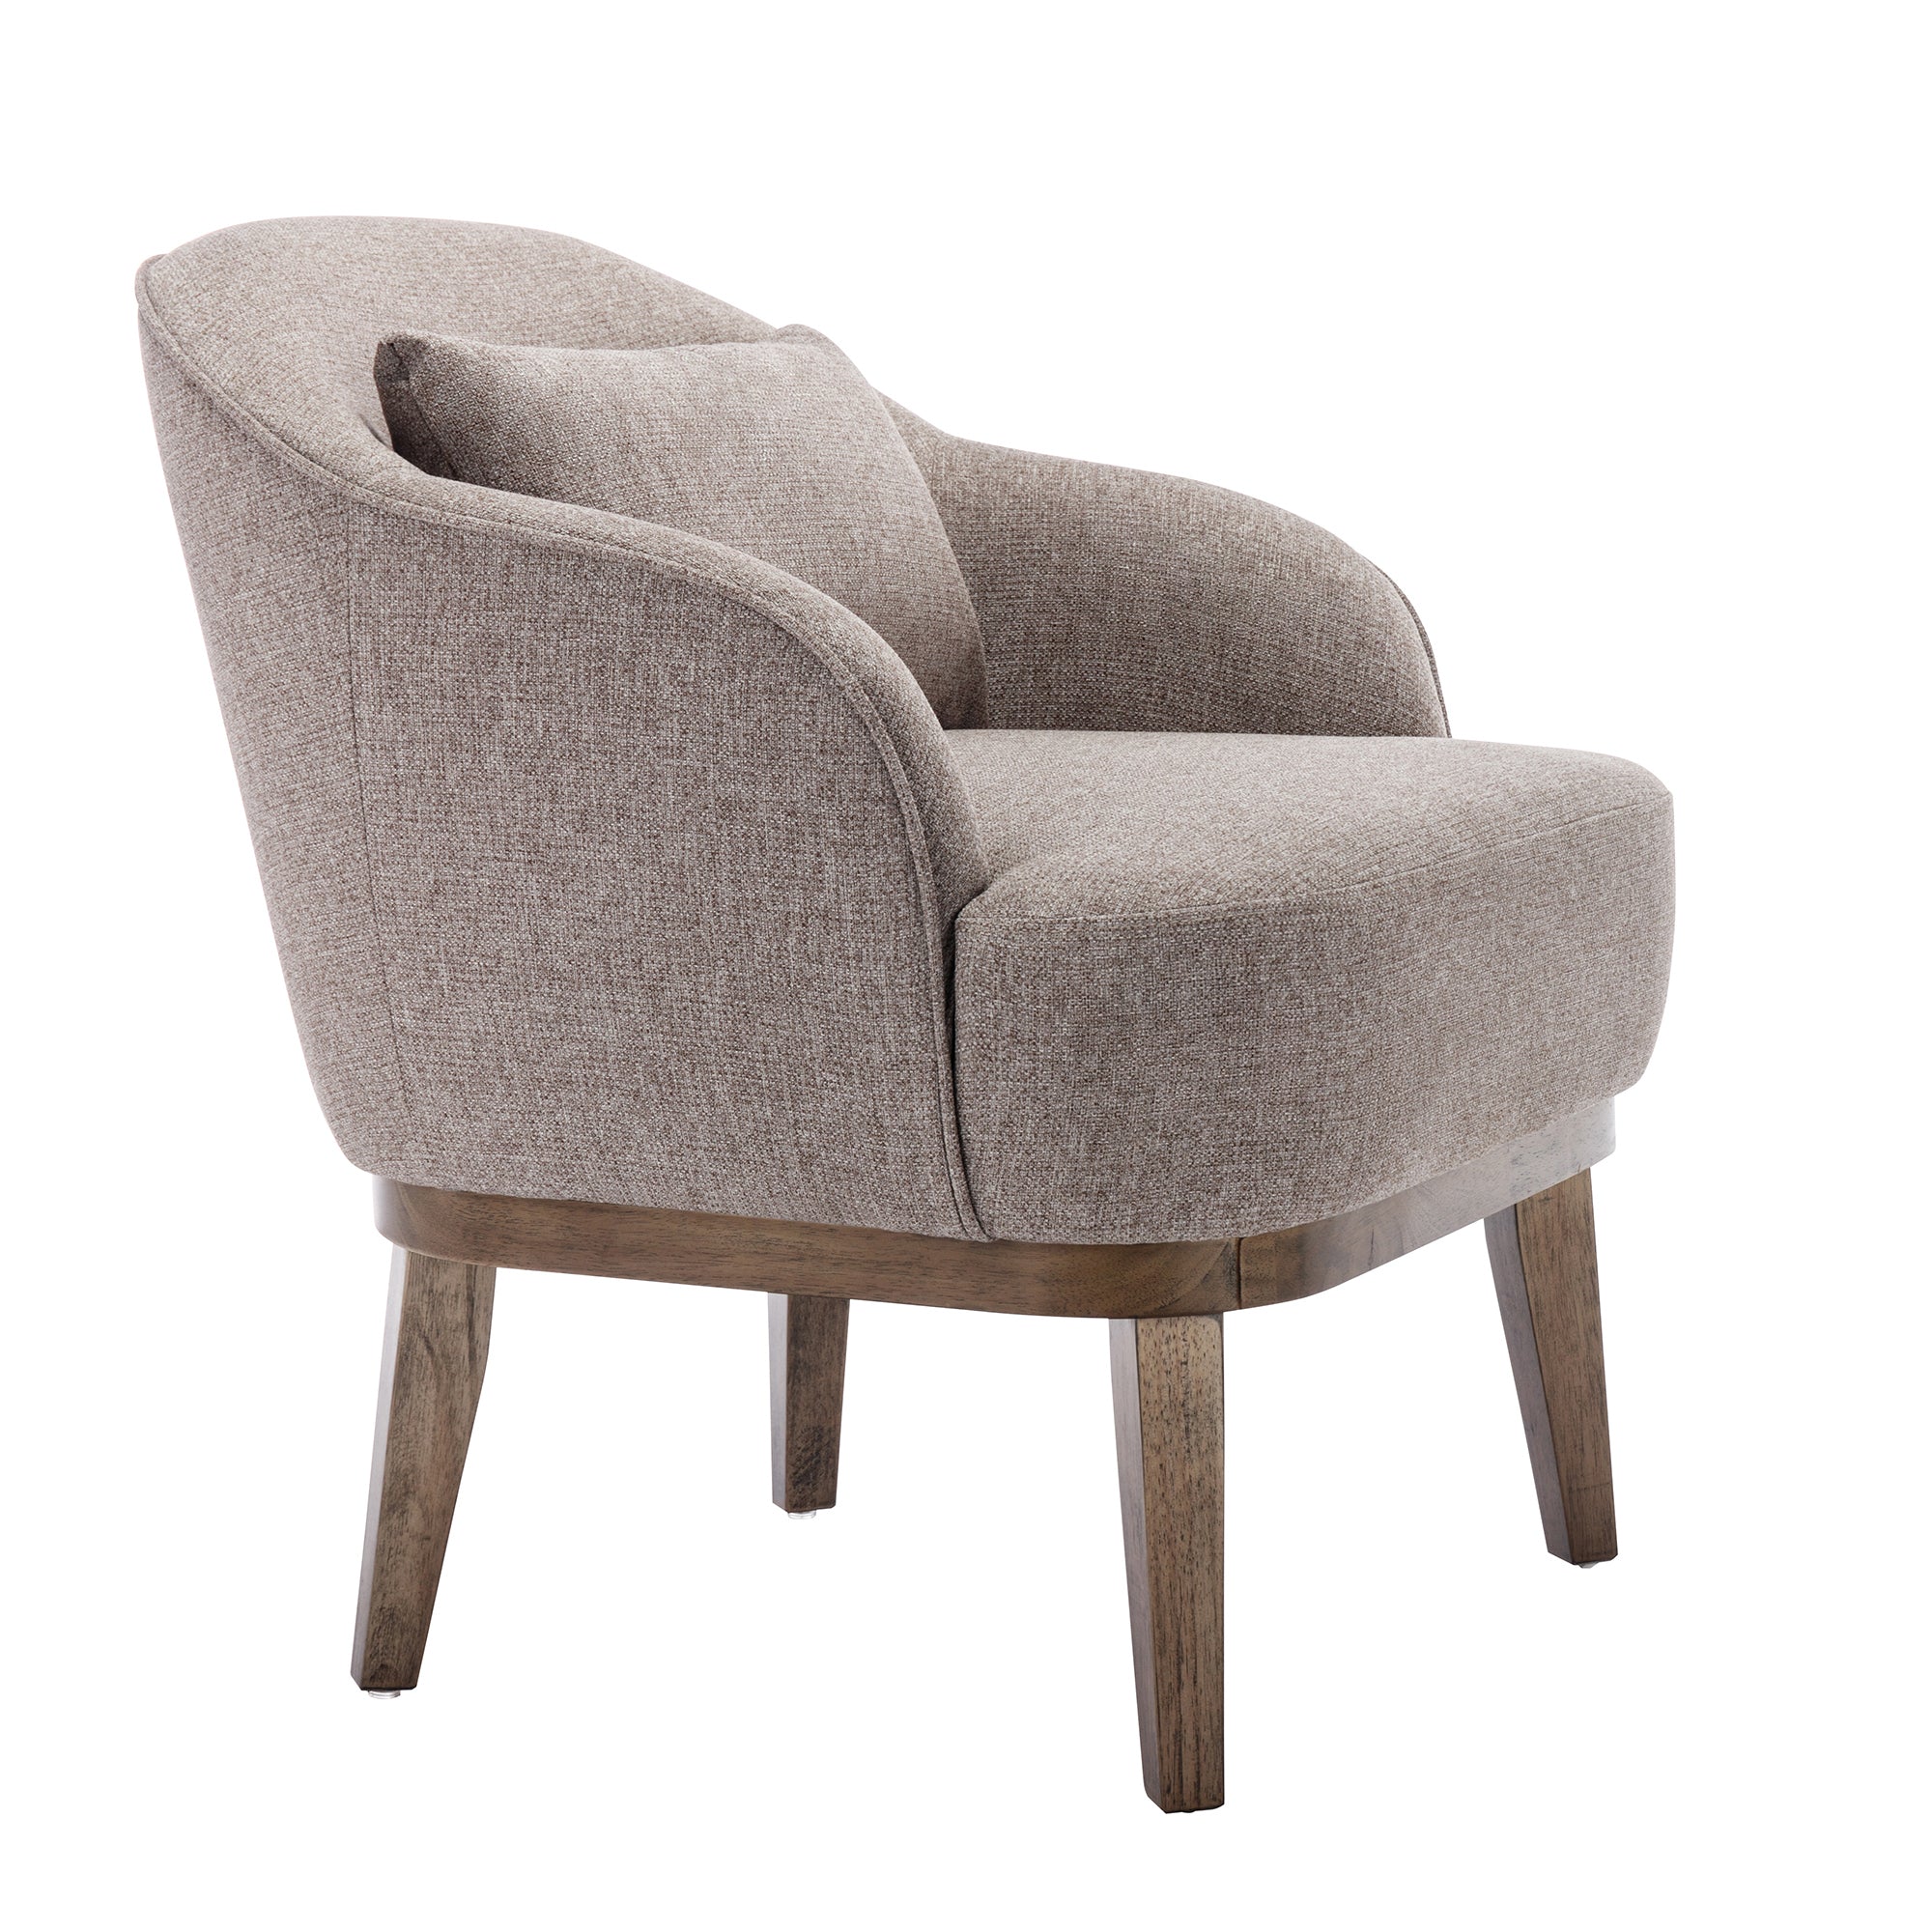 Modern Mid Century Armchair Accent Chair with Pillow tan-linen